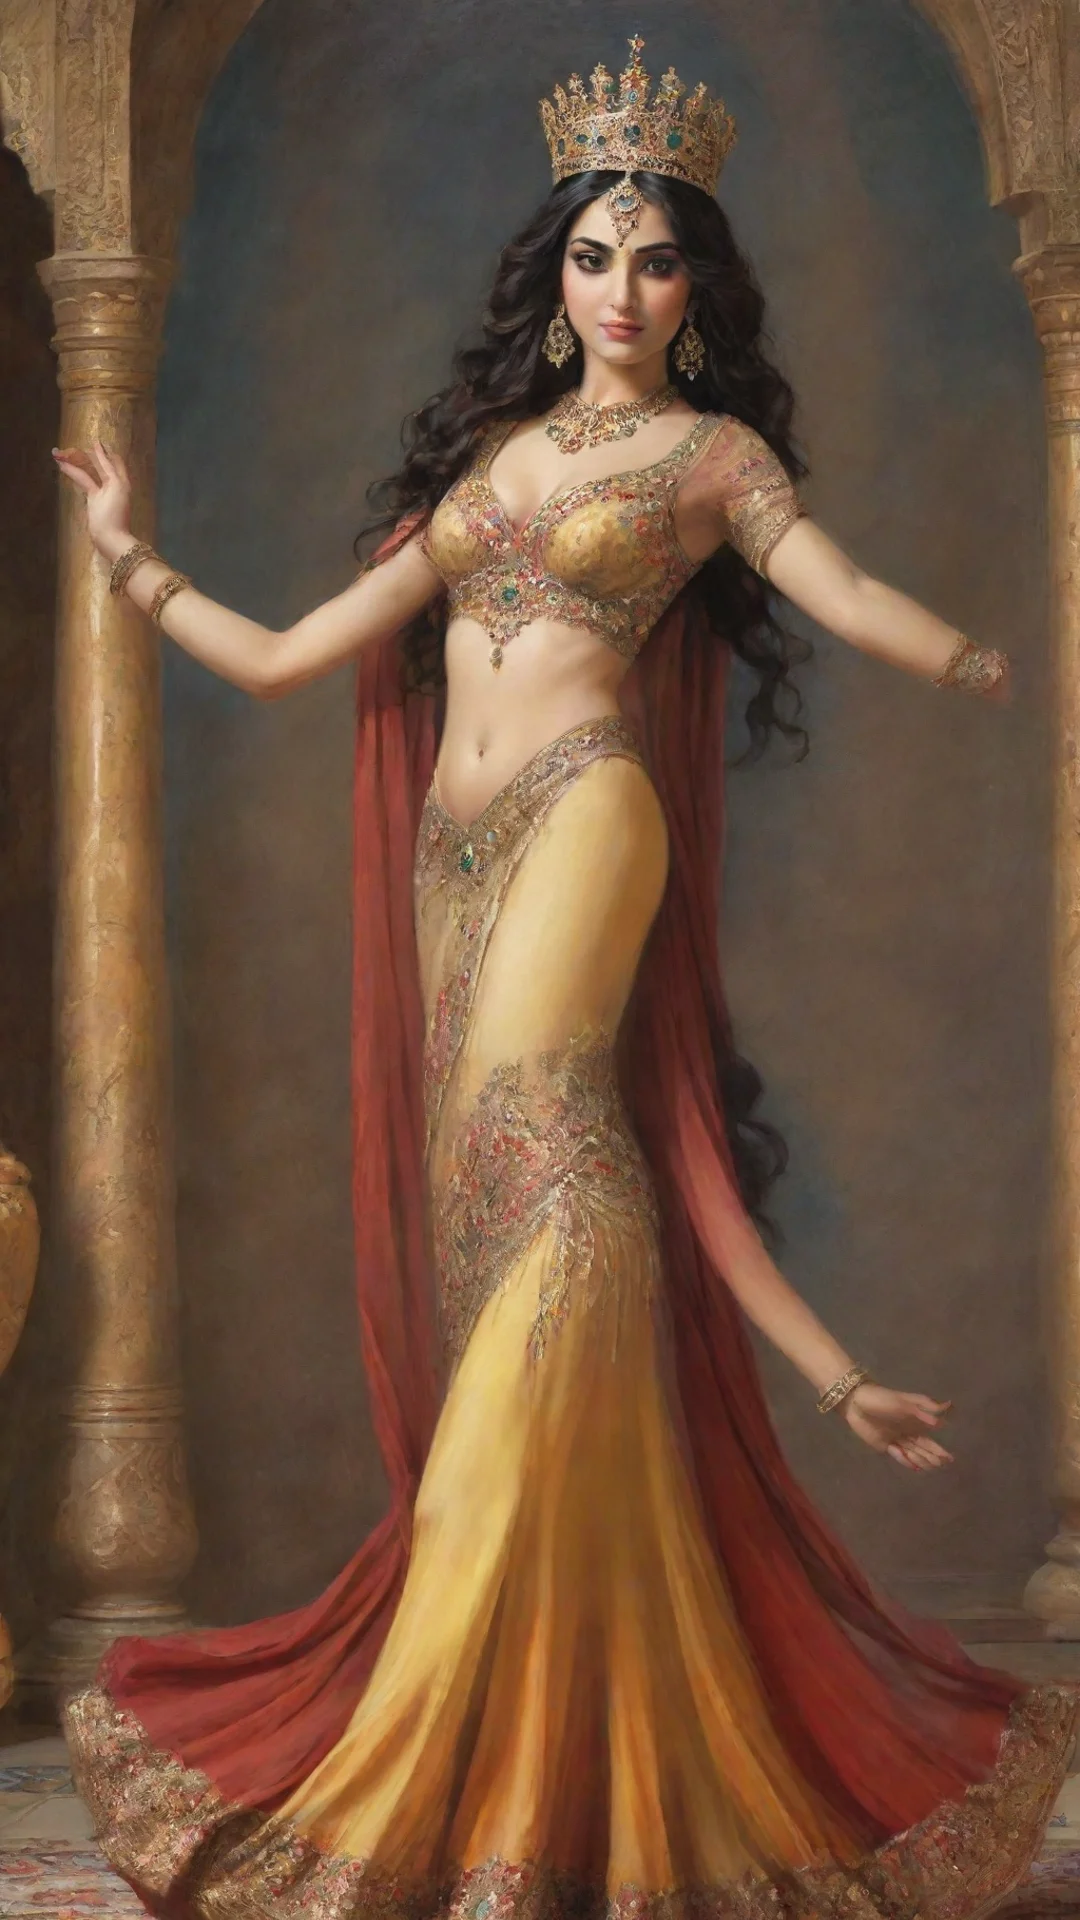 aitrending dancing persian queen good looking fantastic 1 tall